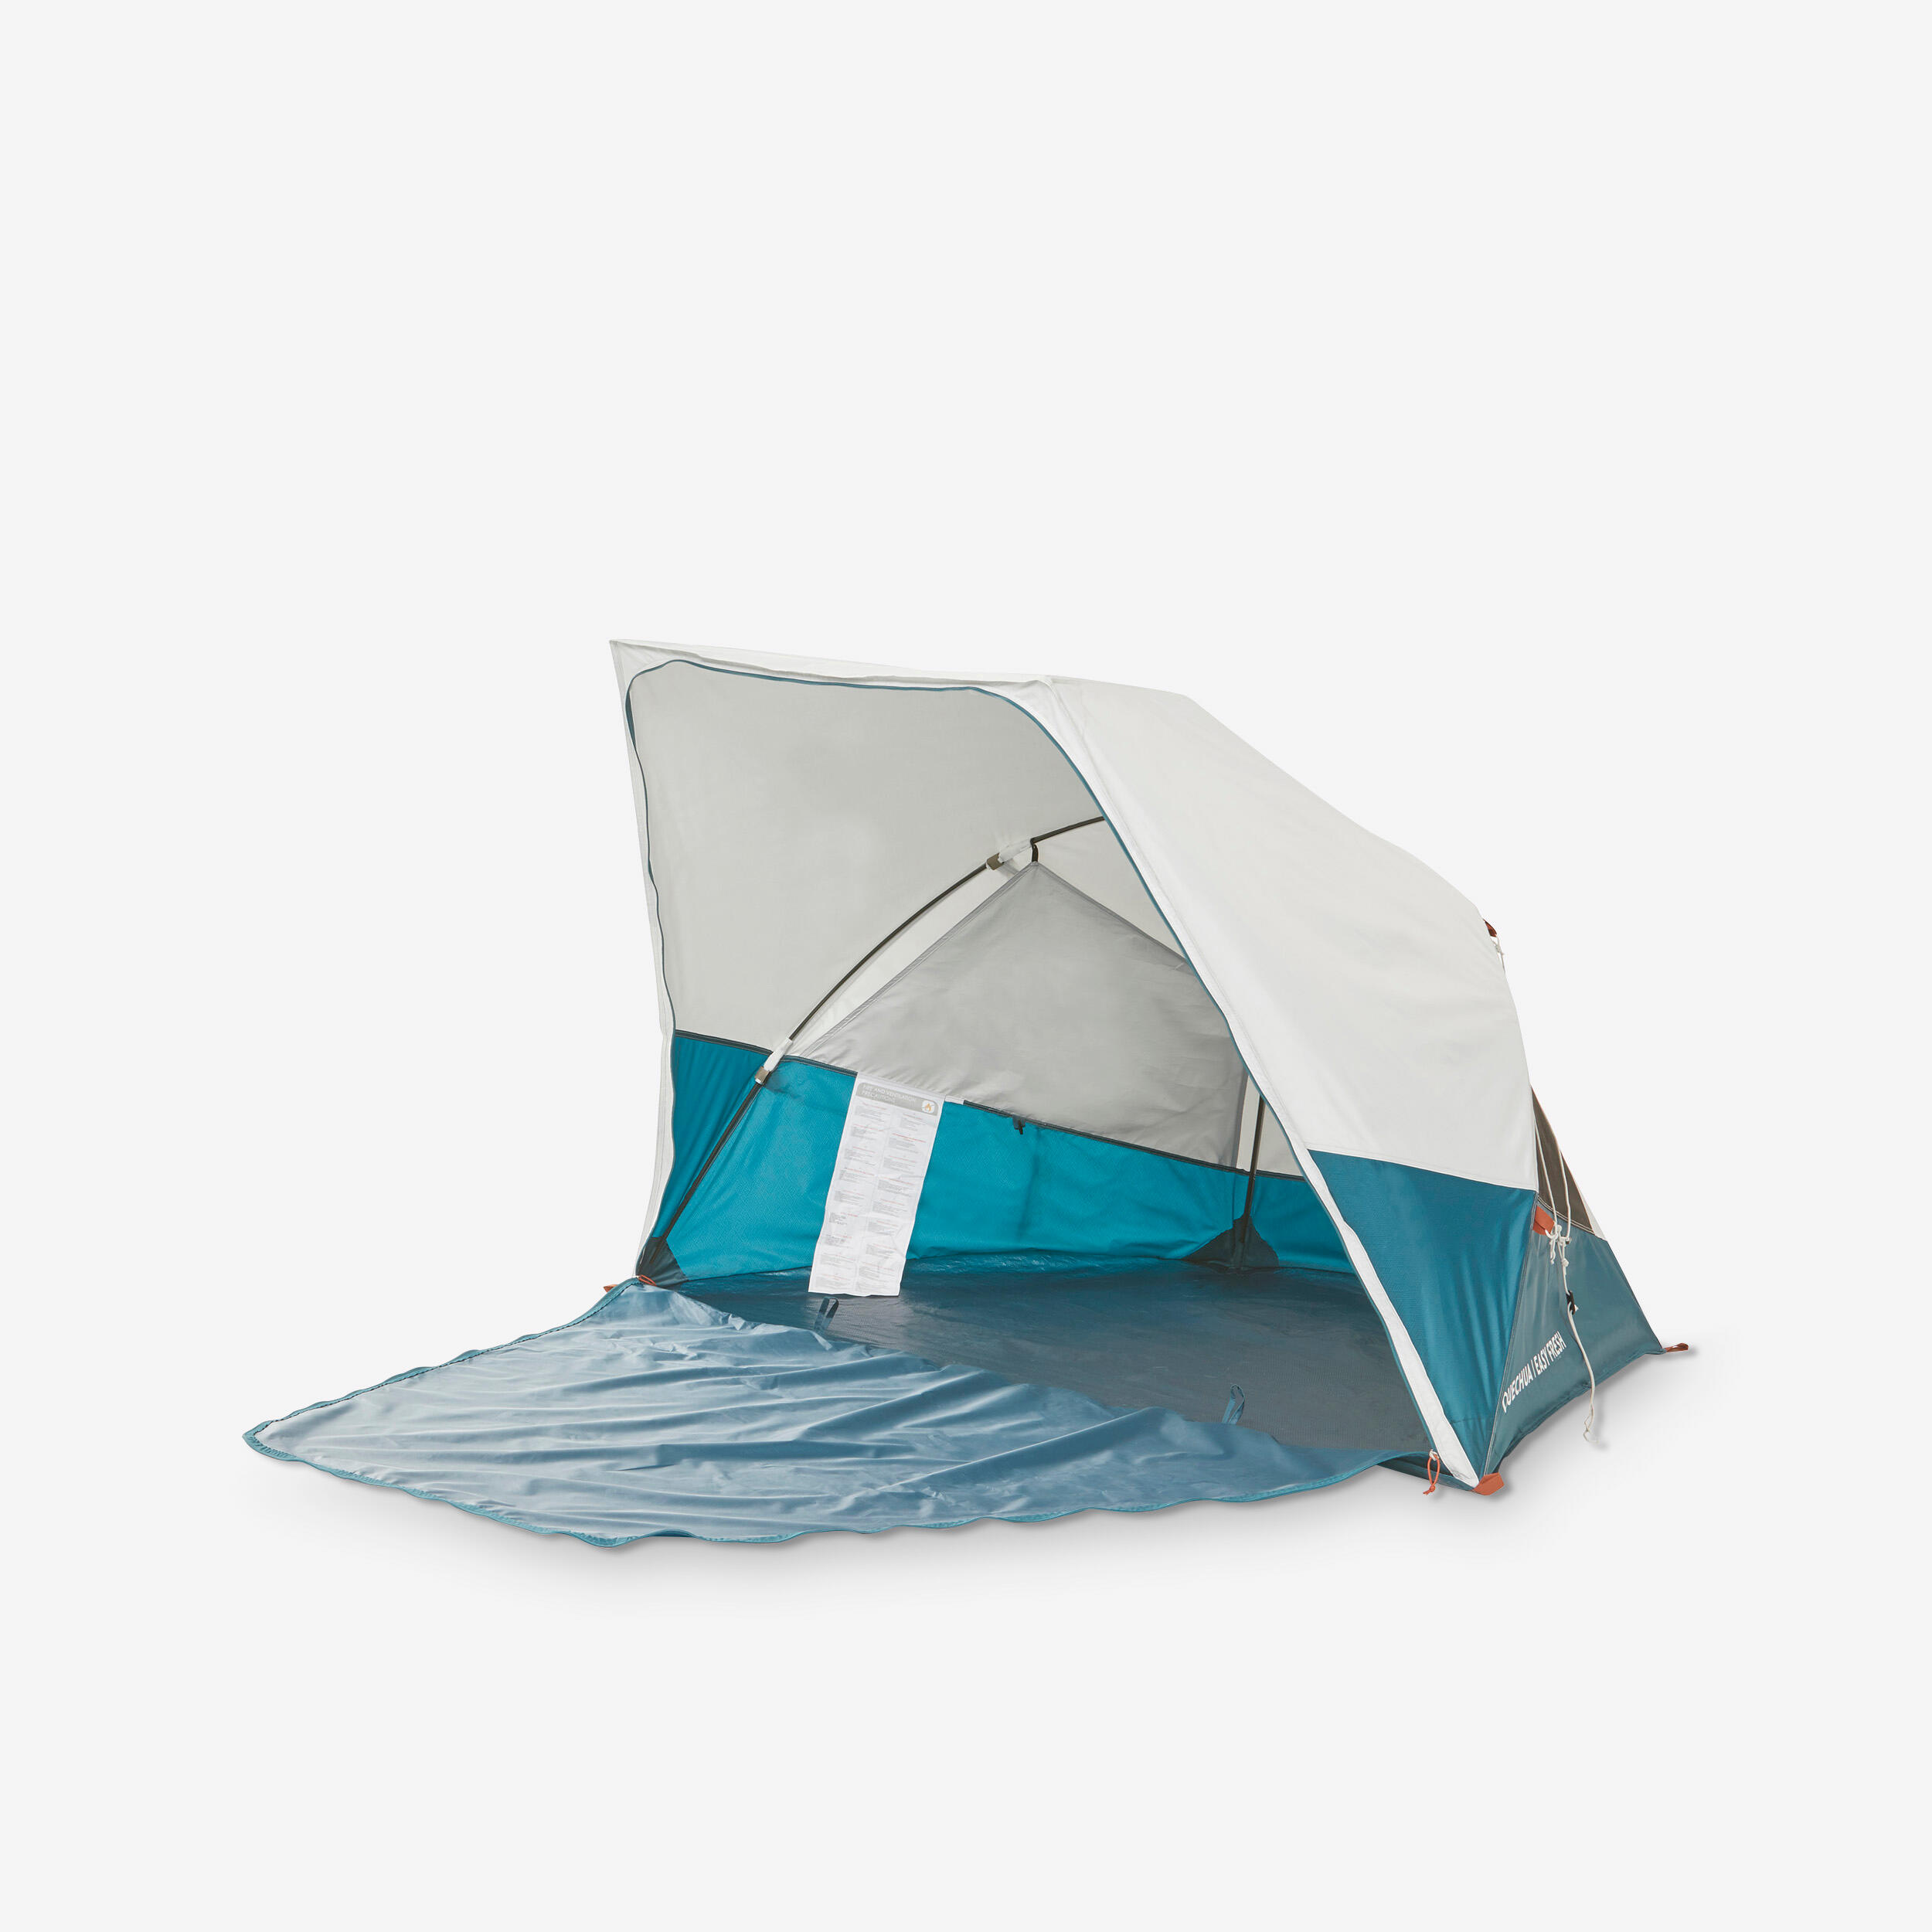 Sonnensegel Zeltplane Regenschutz Wasserdichte Camping Zelt Tarp Sun Plane☯